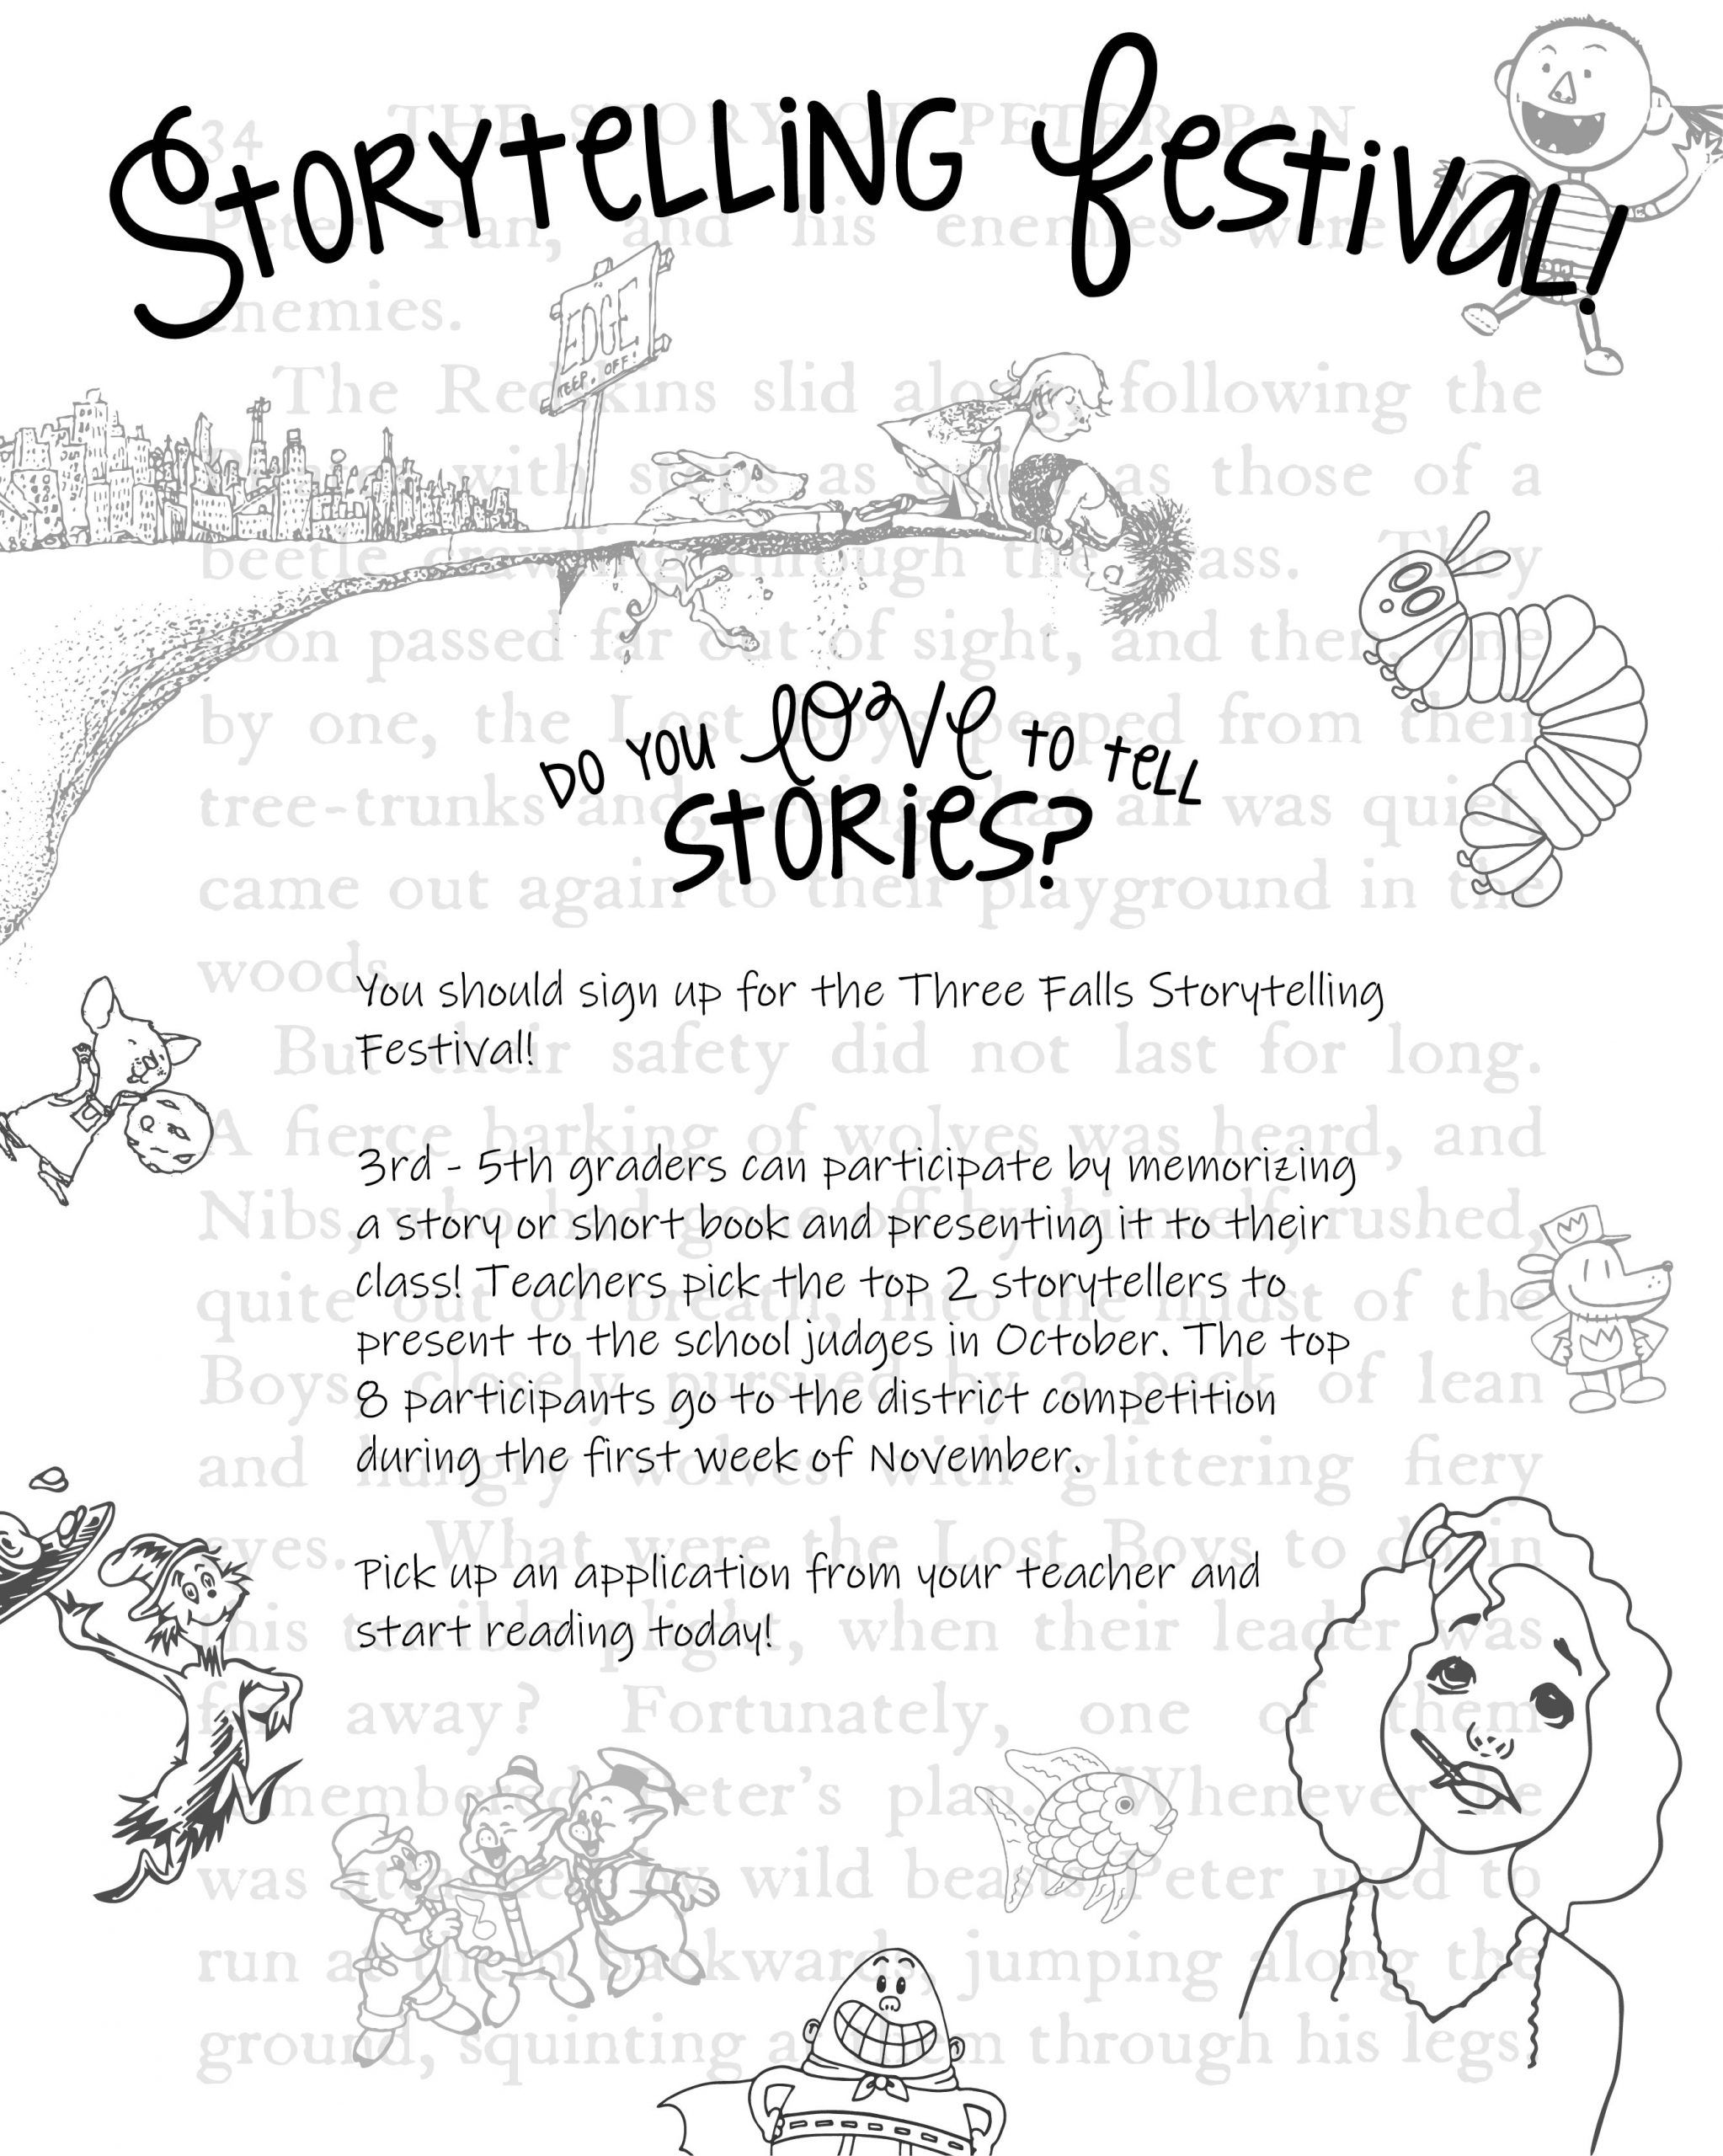 Storytelling Festival informational flyer